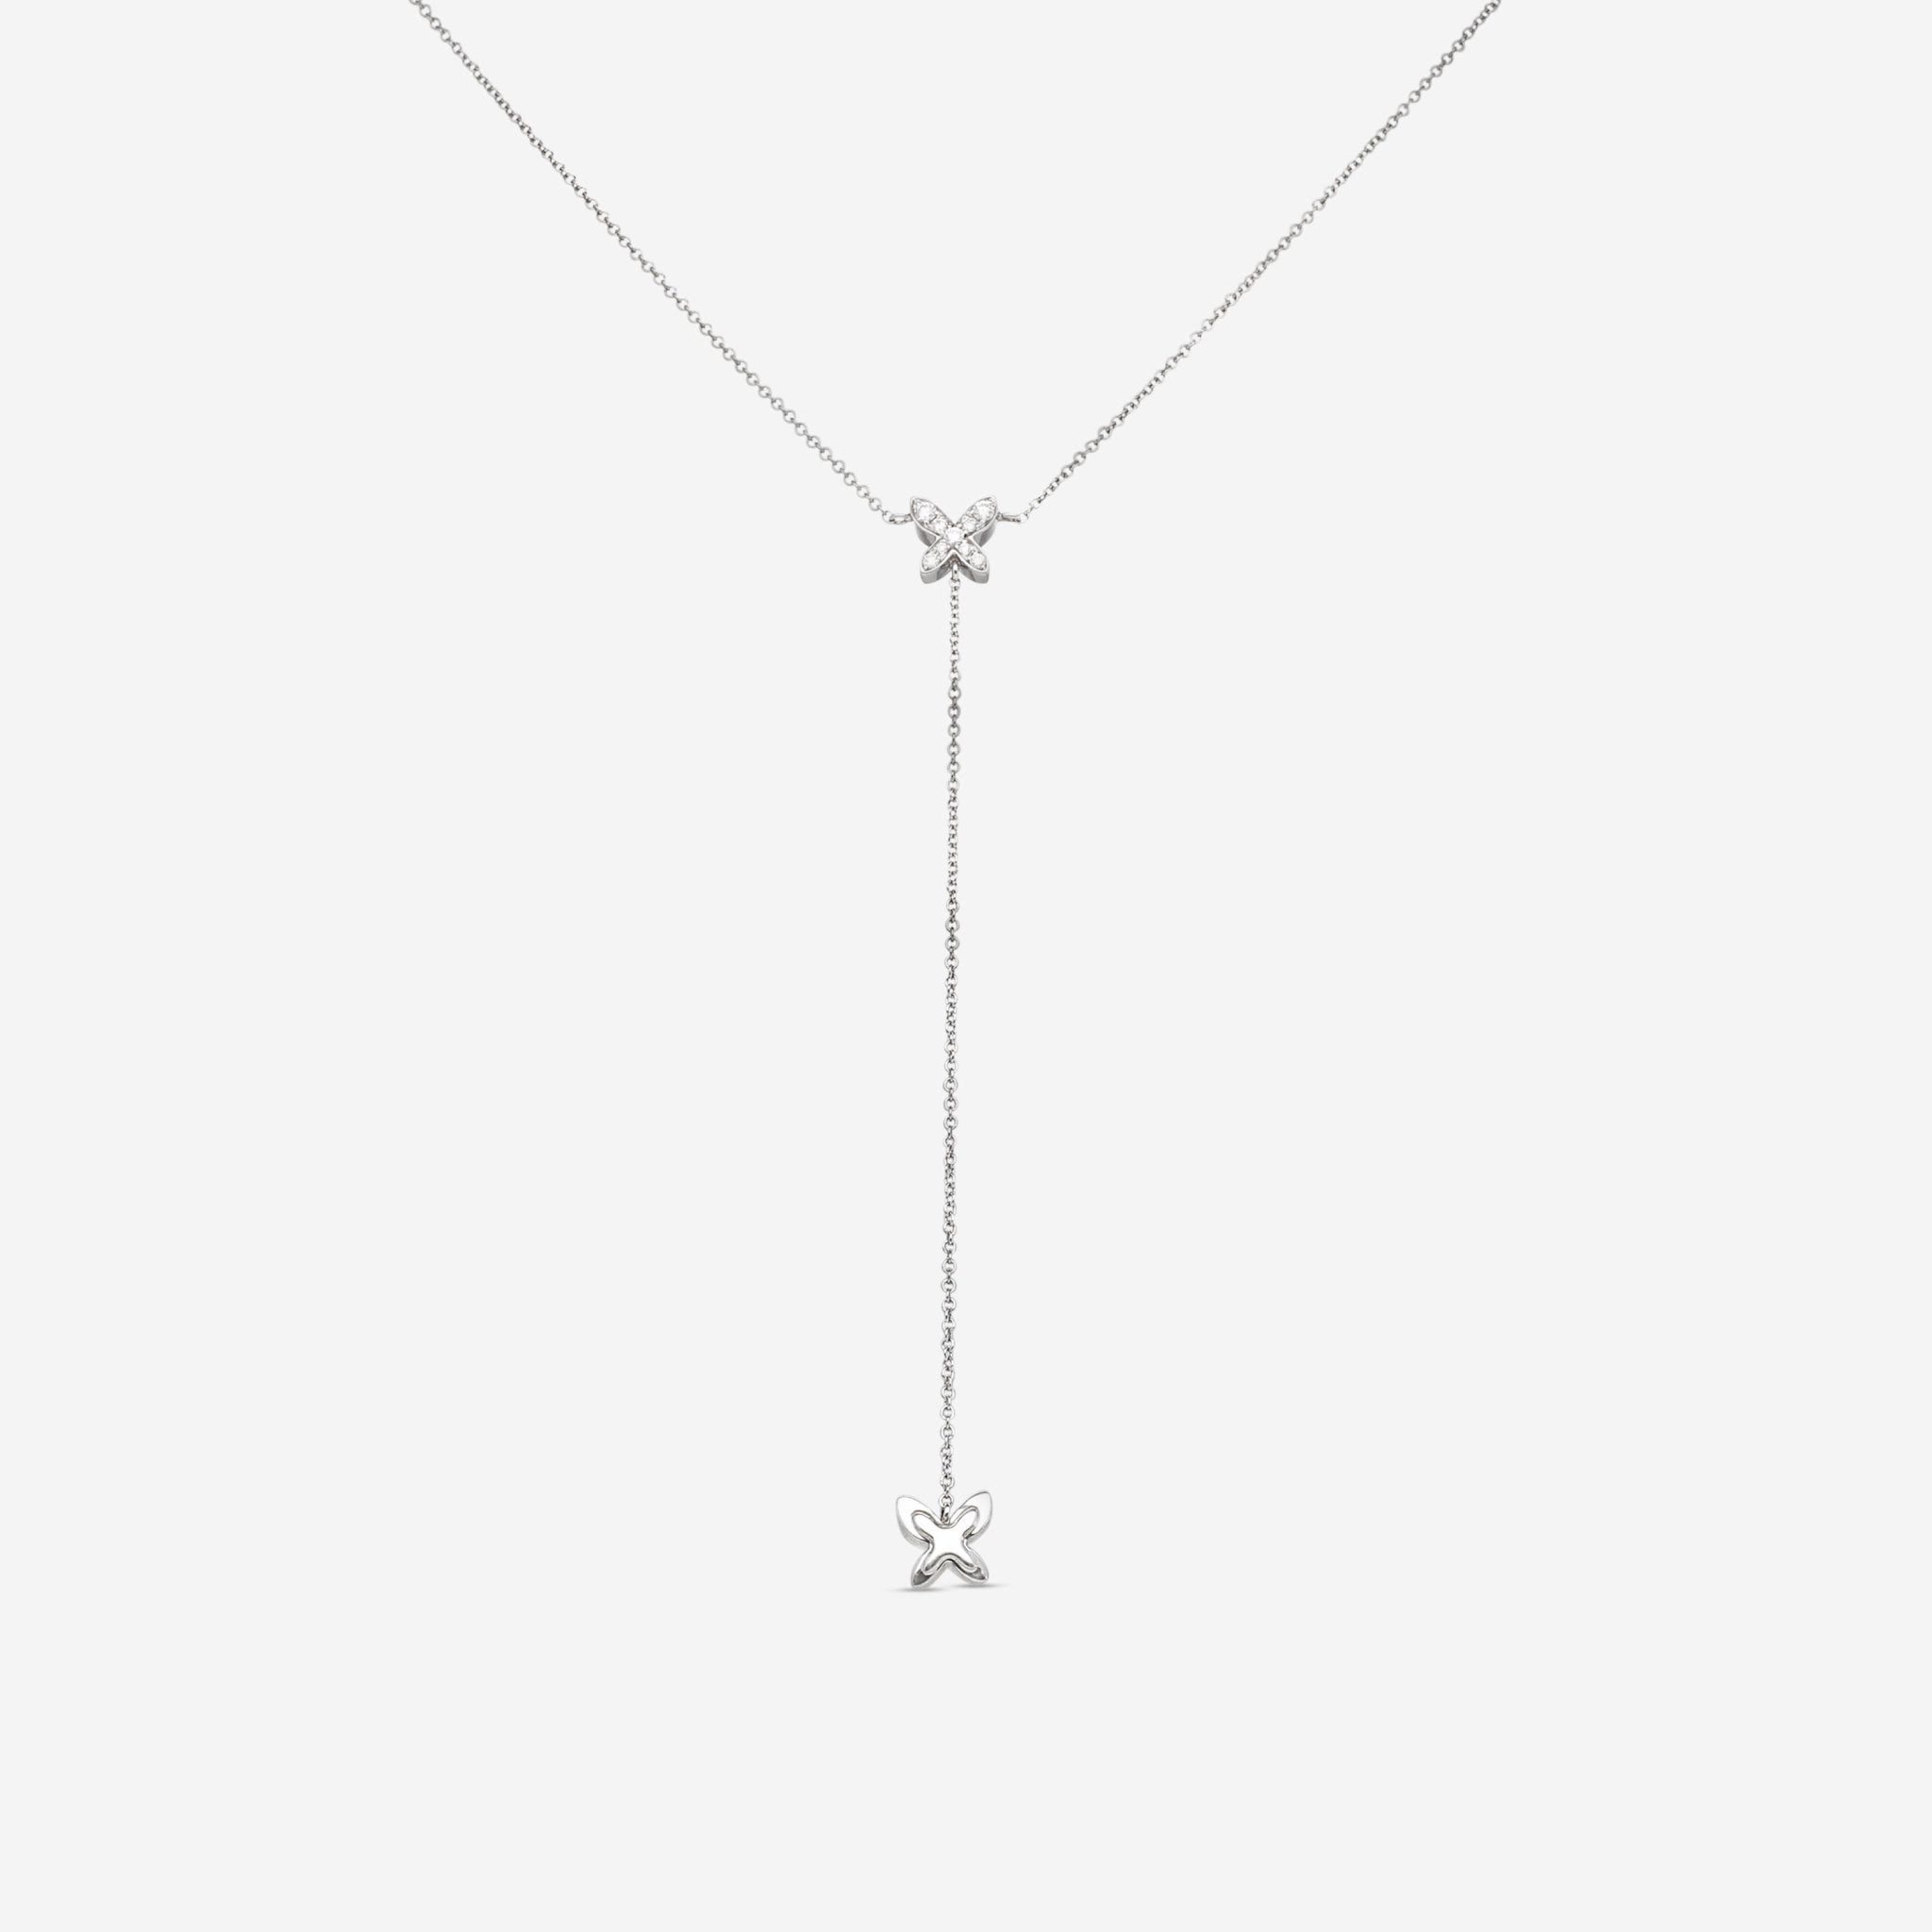 Mimi Milano Freevola 18K White Gold, Diamond Drop Necklace CXM368B8B - THE SOLIST - Mimi Milano